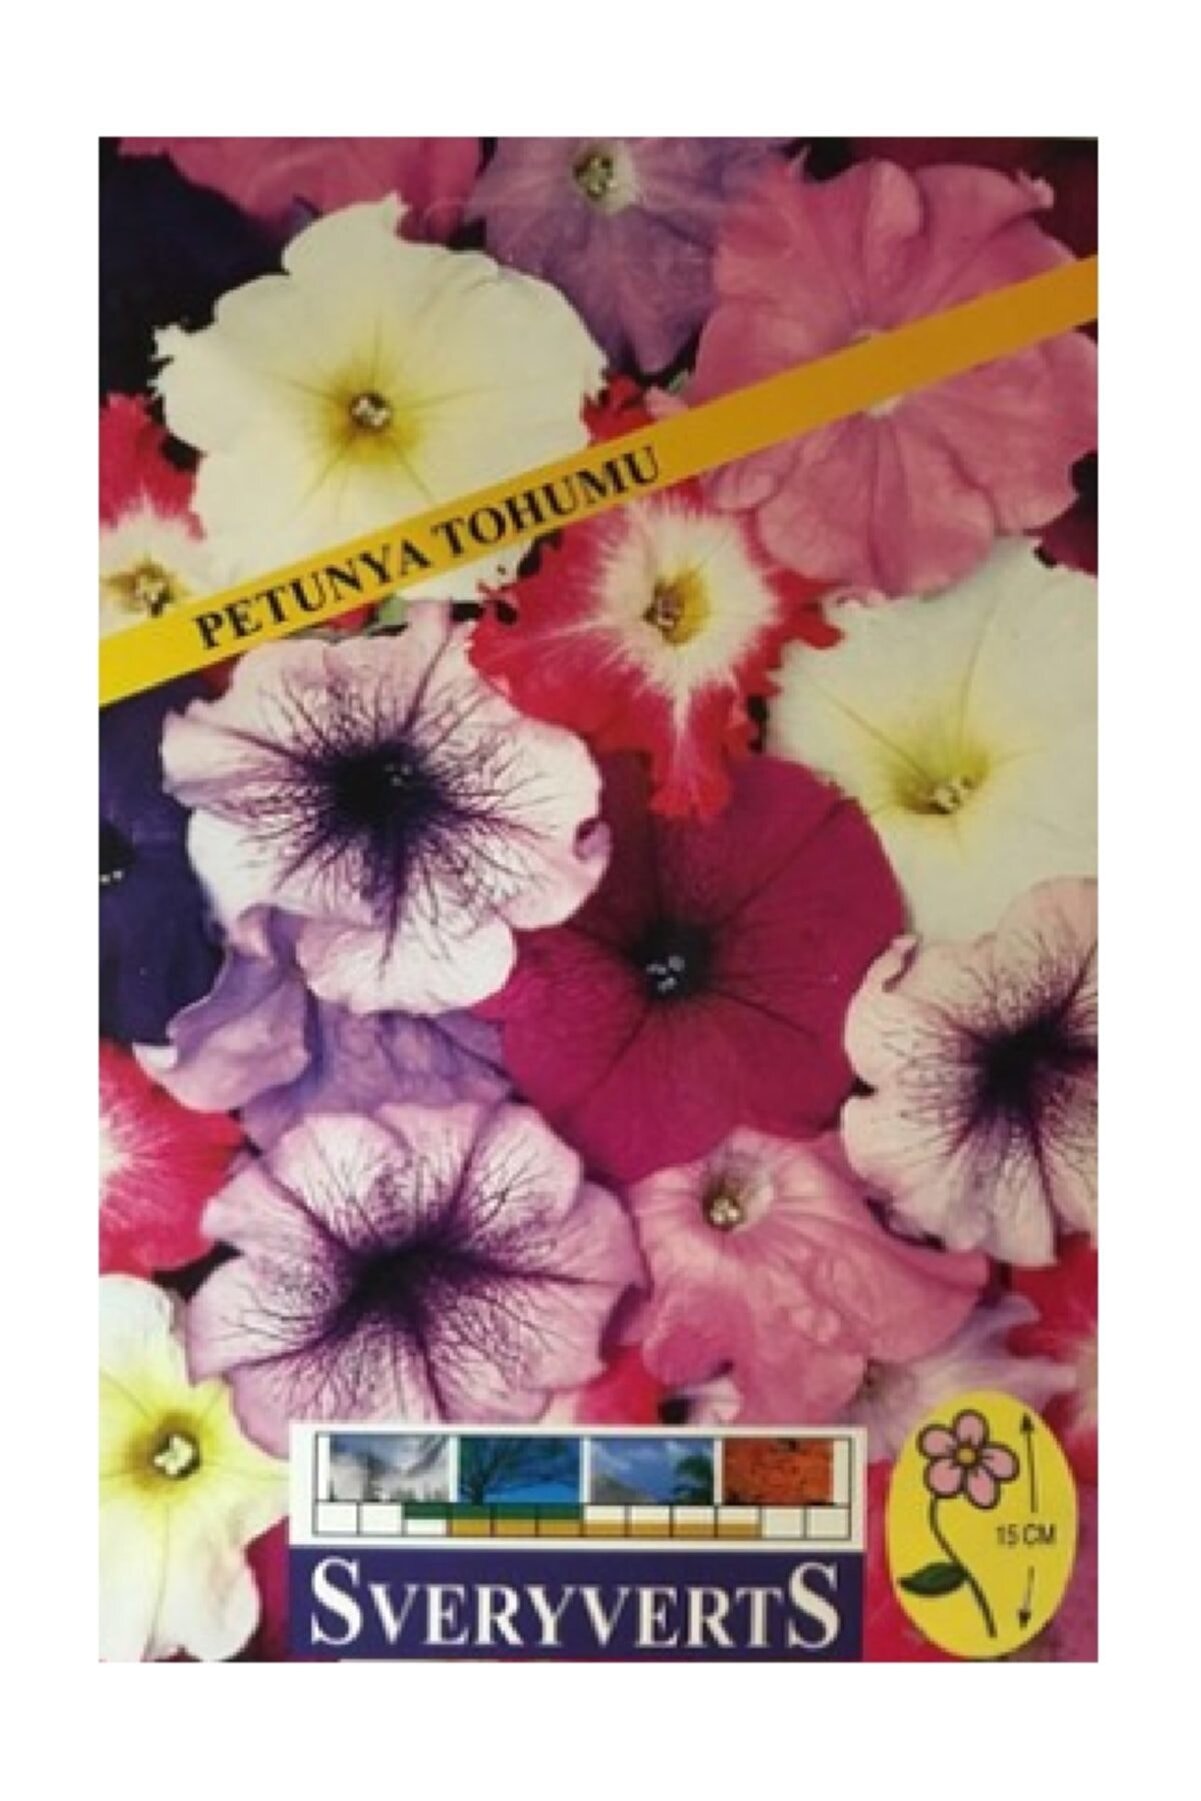 SVERYVERTS Petunya Çiçeği Tohumu 1 Paket